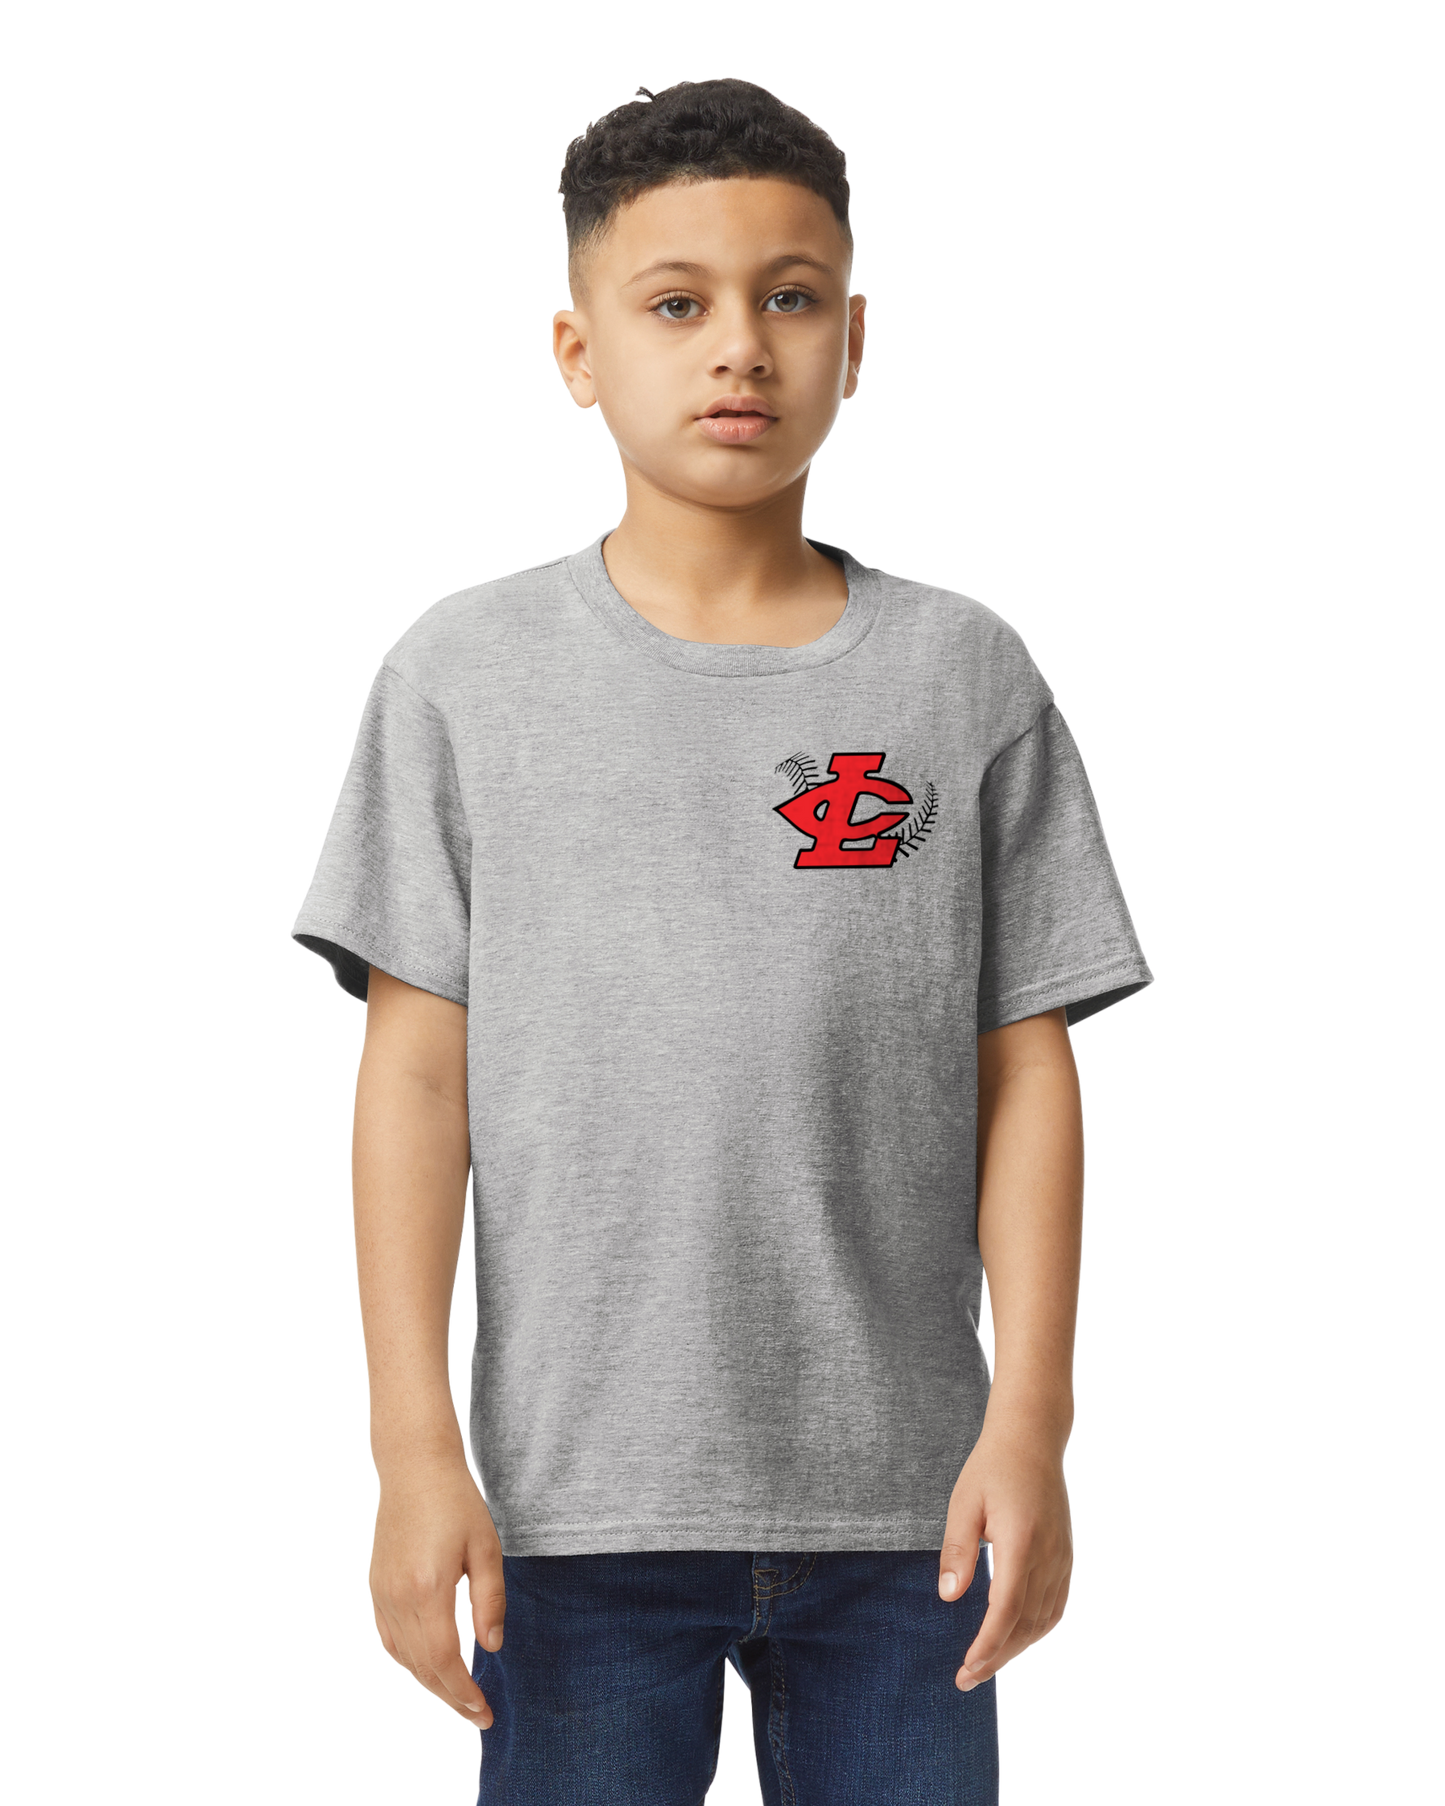 CLLL Youth Gildan Softstyle tshirt - GRAY